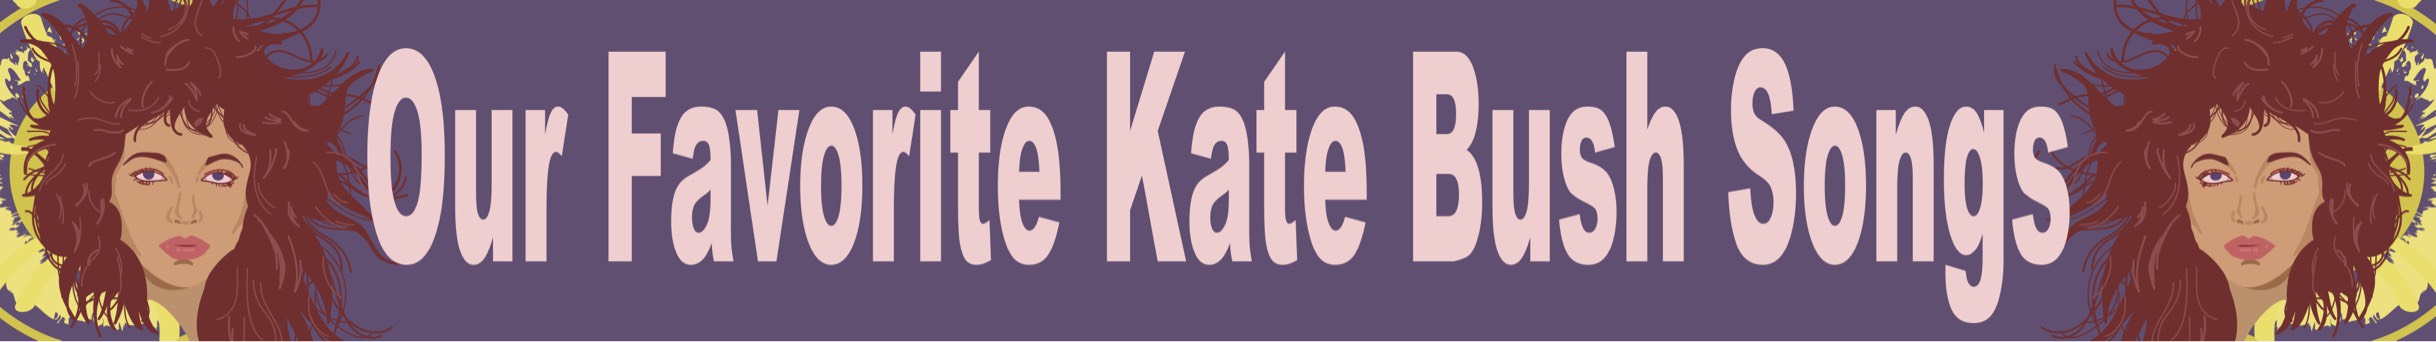 Our Favorite Kate Bush Songs